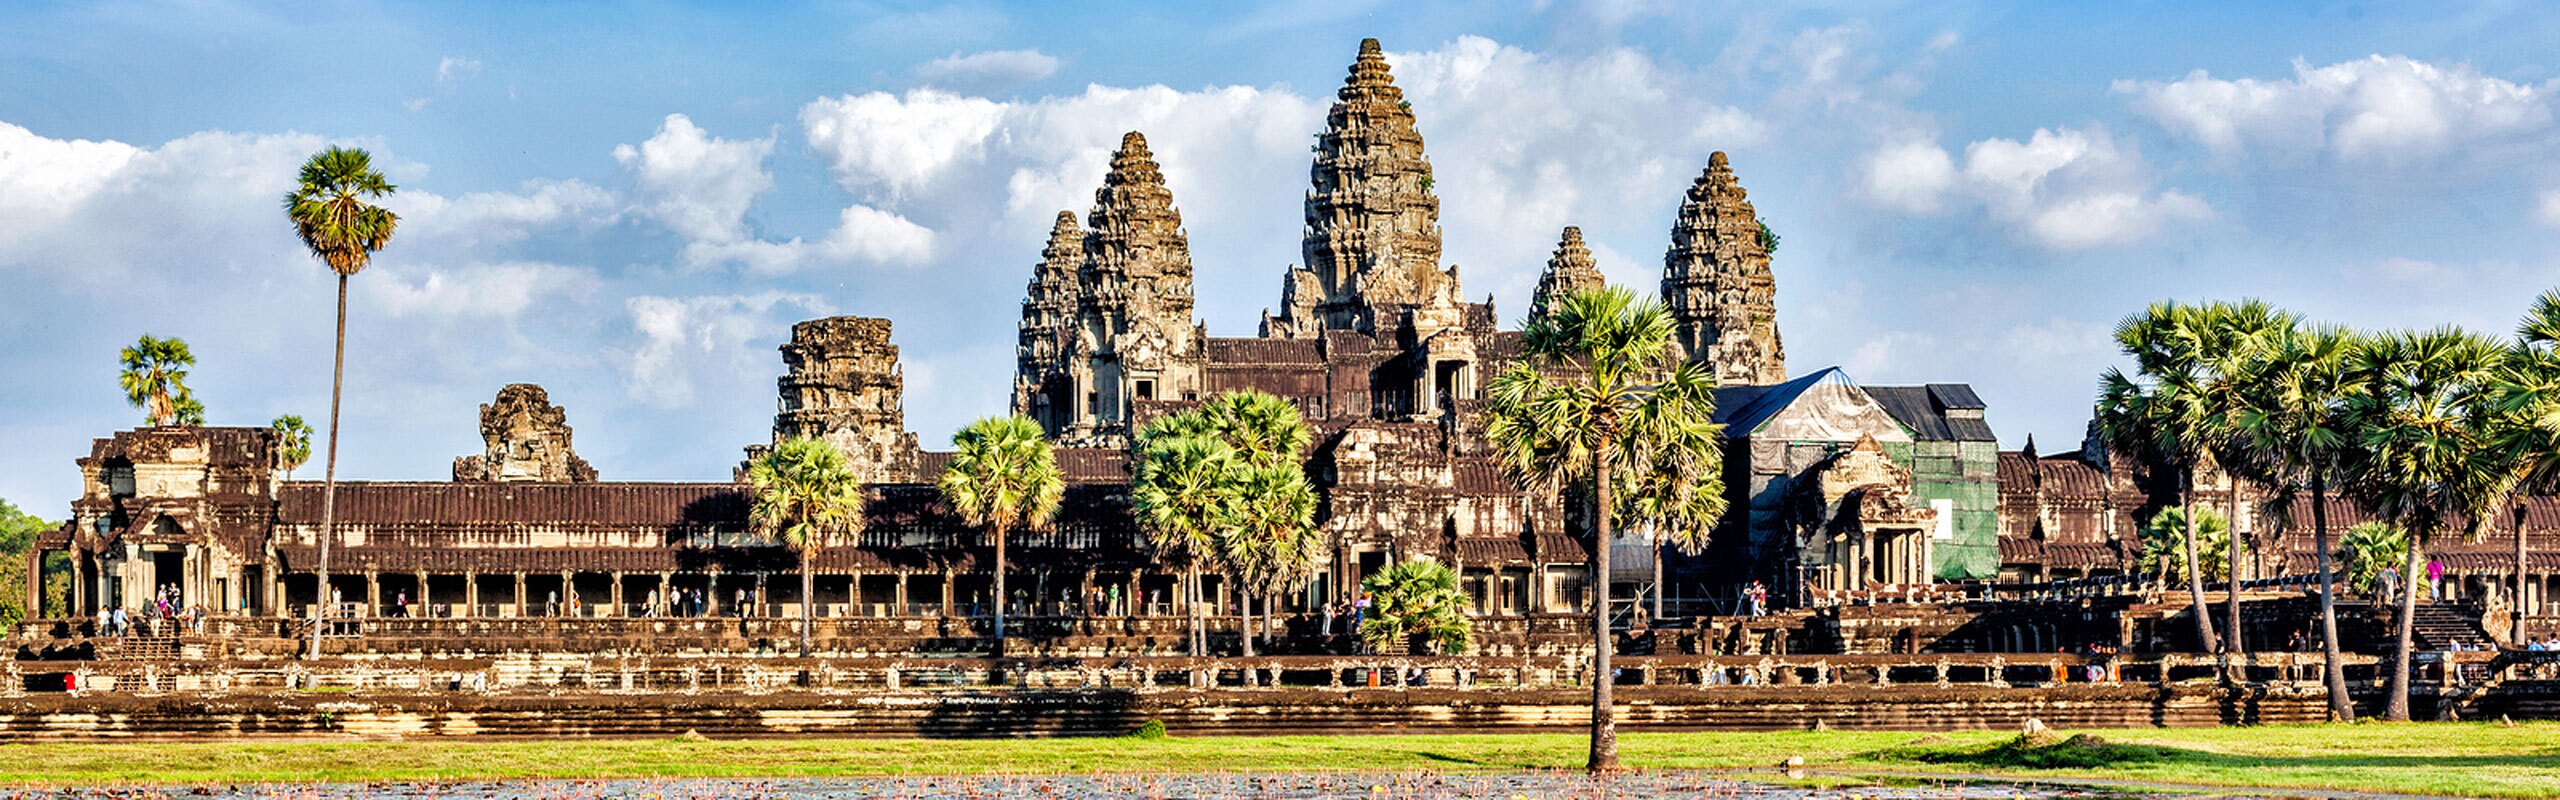 Angkor Wat Travel Guide